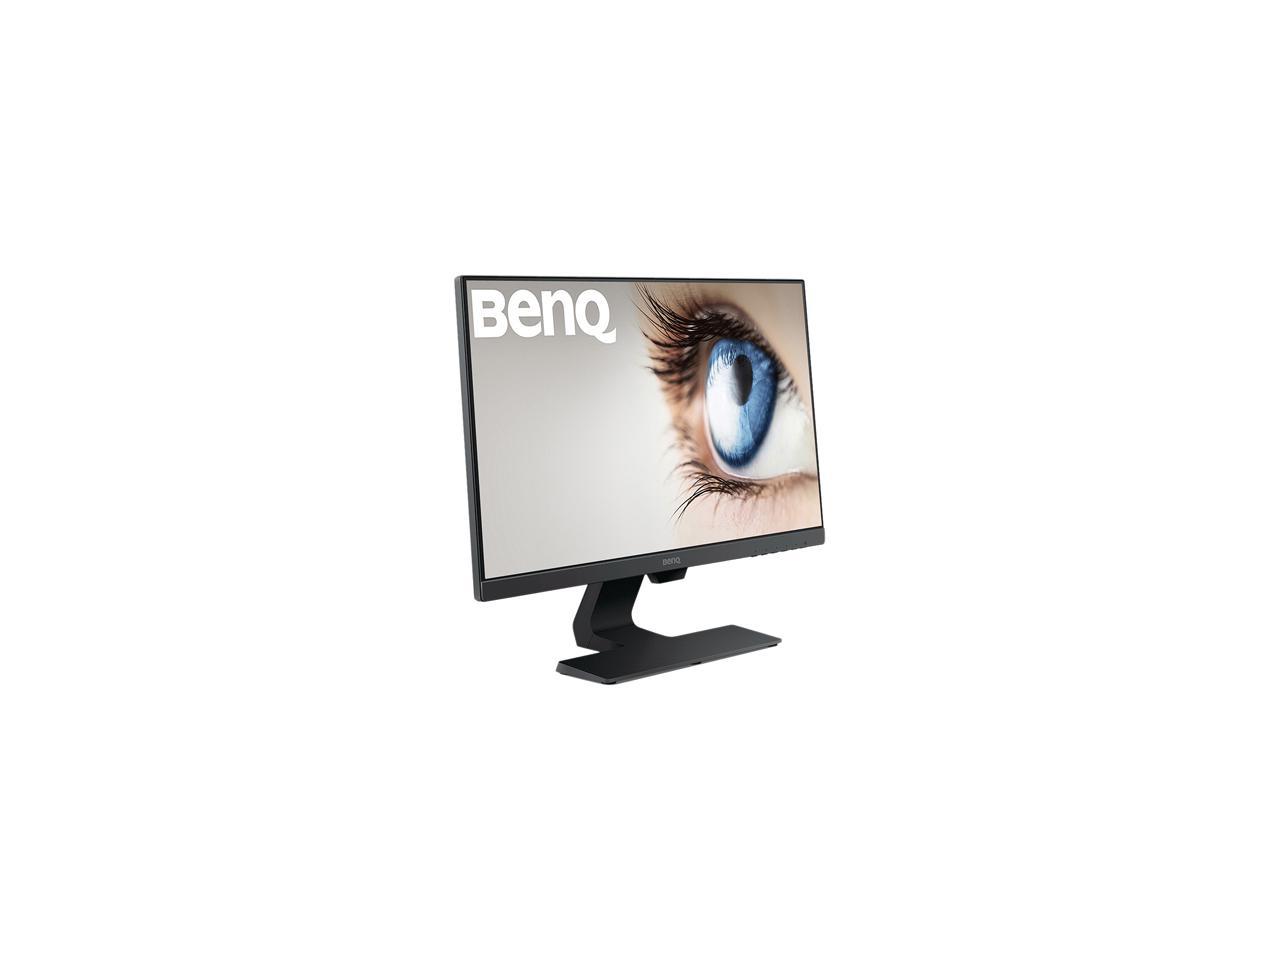 BenQ BL2480 24" (Actual size 23.8") Full 1920 x 1080 60Hz 5ms HDMI DisplayPort Built-in Speakers Eye-Care Technology Slim Bezel LED Backlit IPS LCD Monitor - Newegg.com